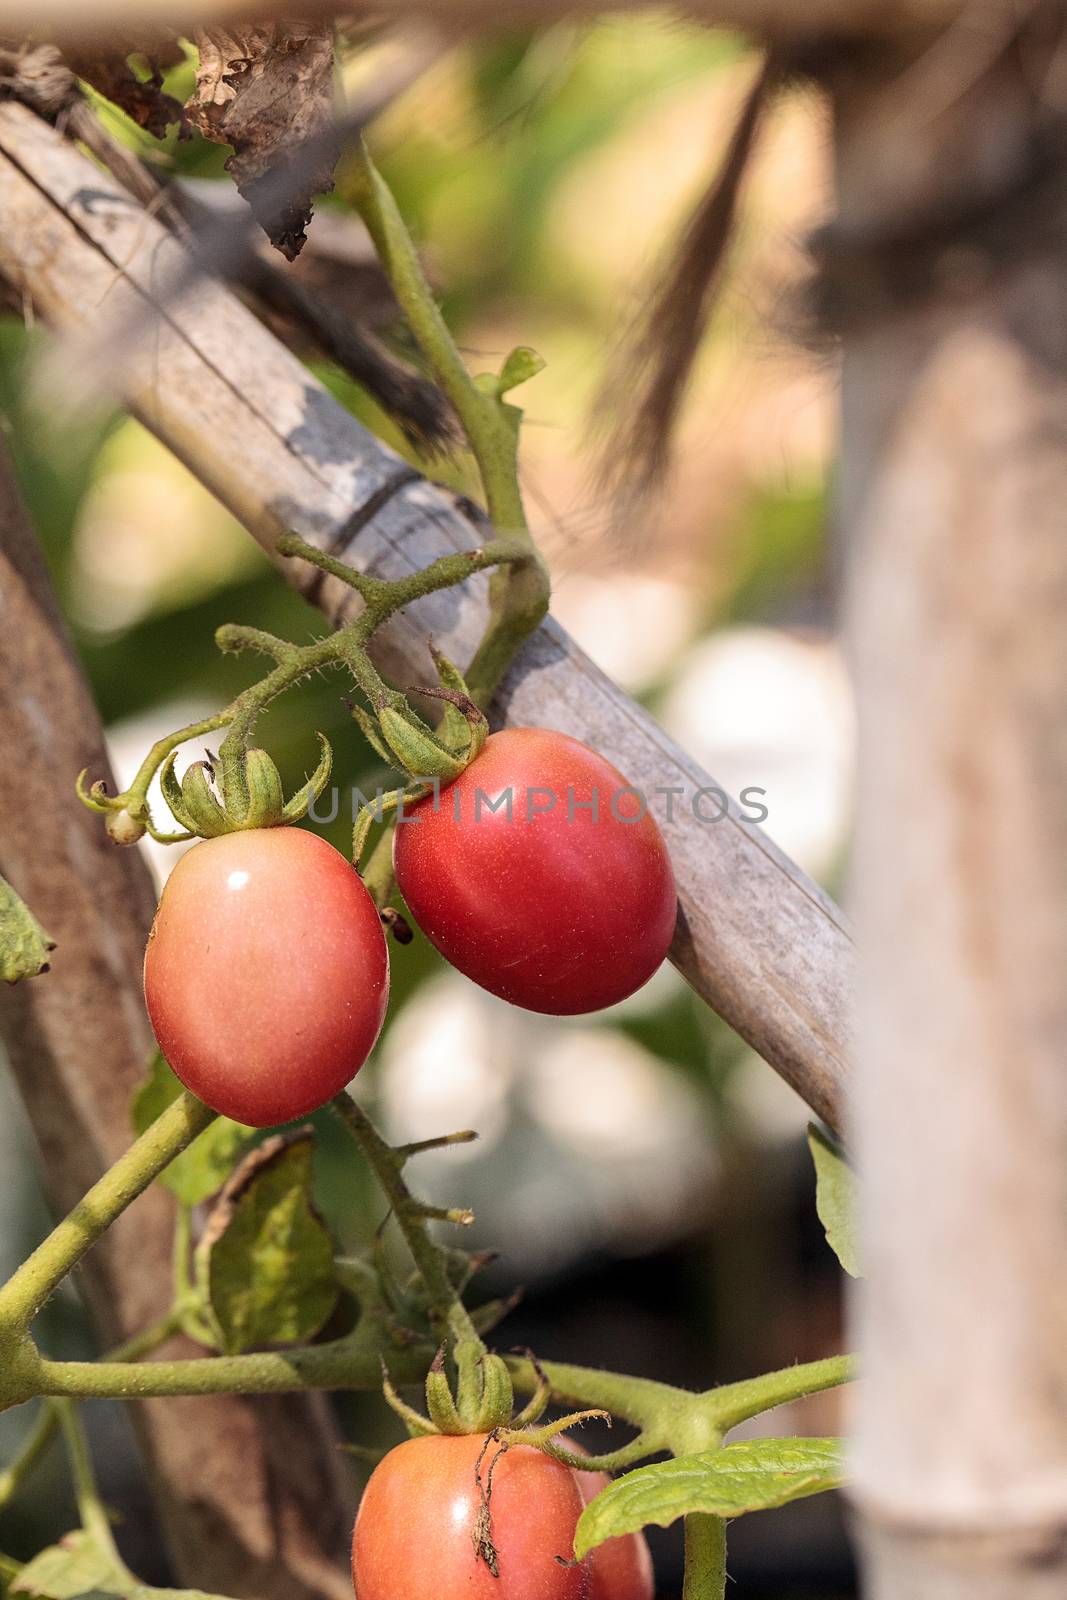 Katana tomato Lycopersicon lycopersicum grows by steffstarr